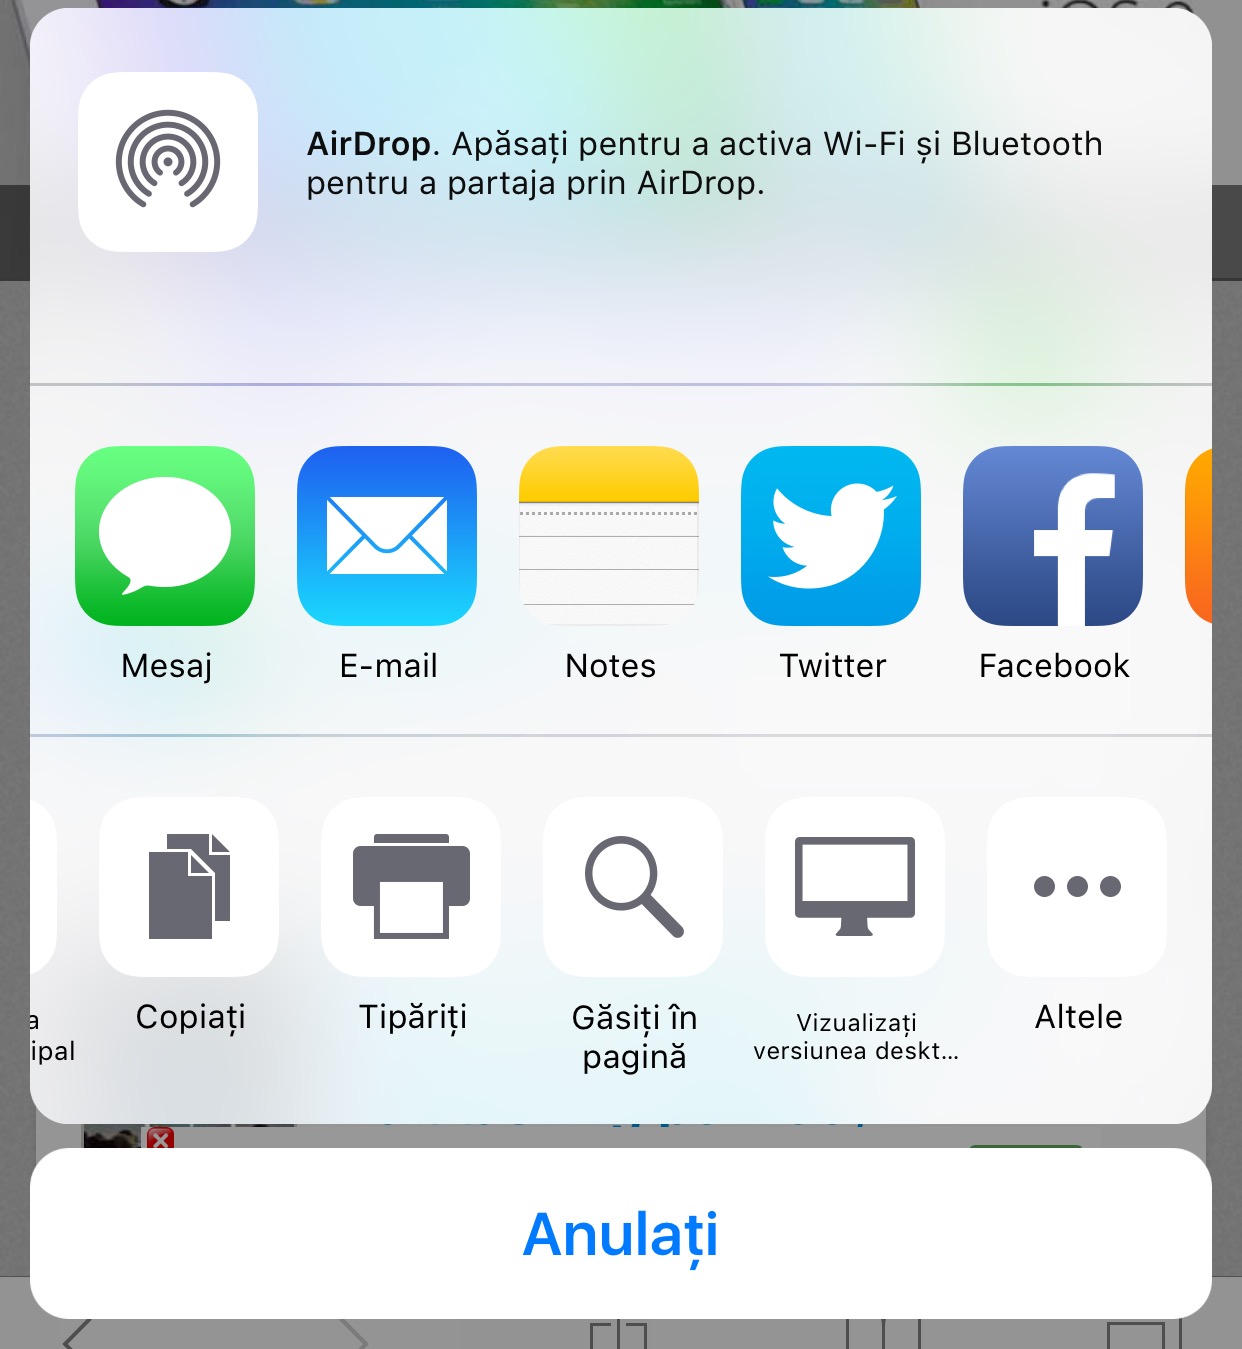 iOS 9 Safari view desktop share sheets